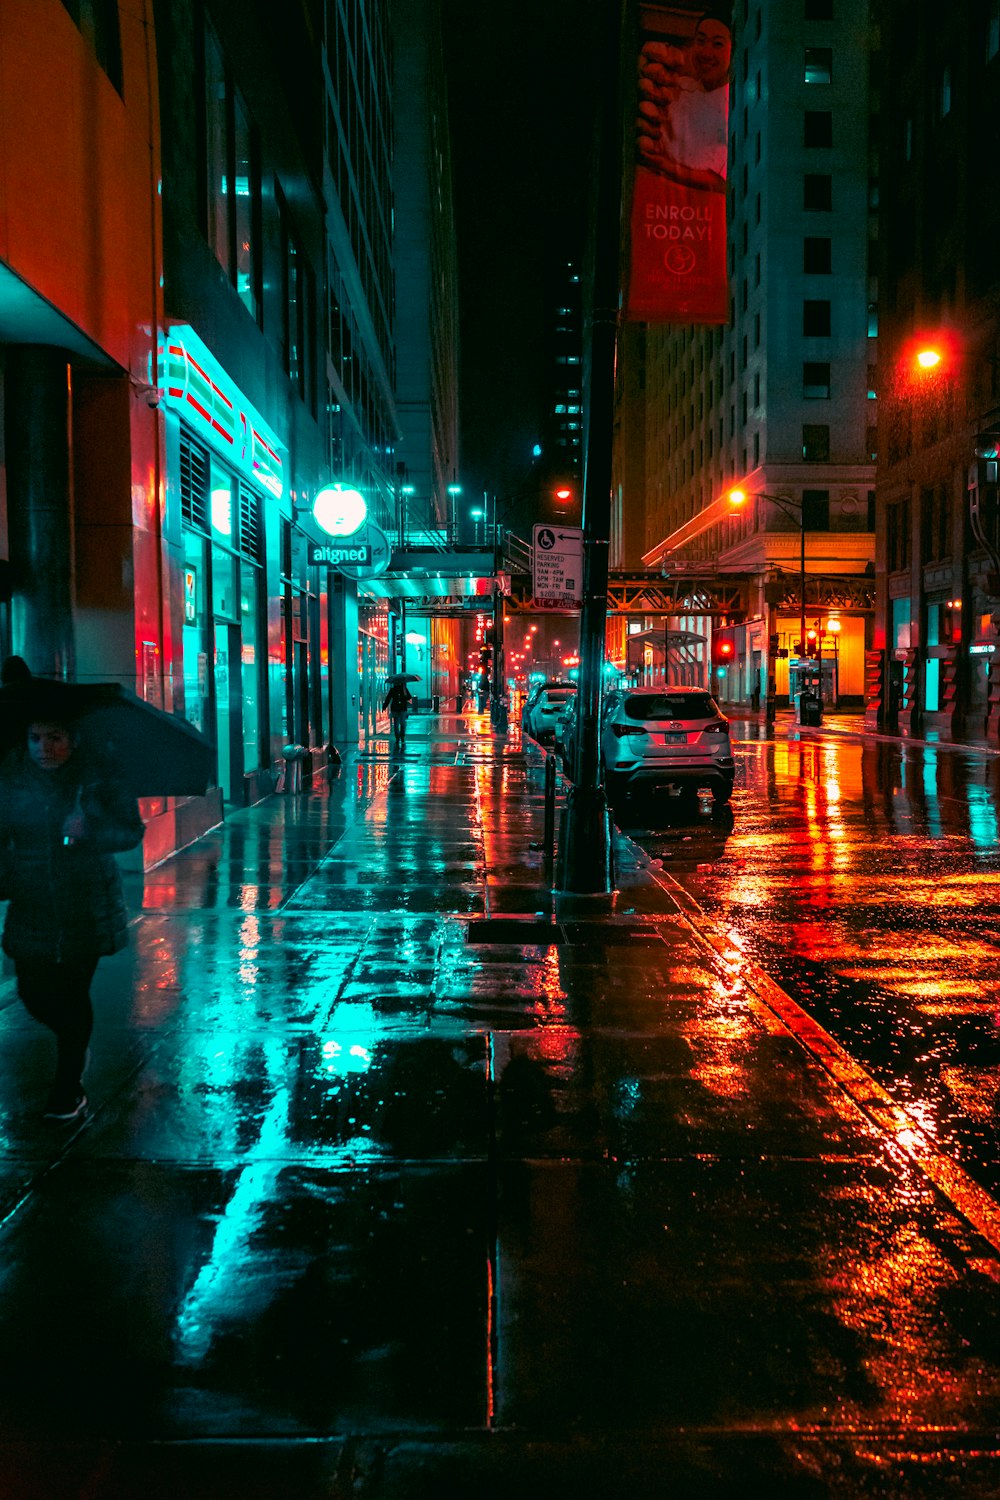 a person walking down a street holding an umbrella